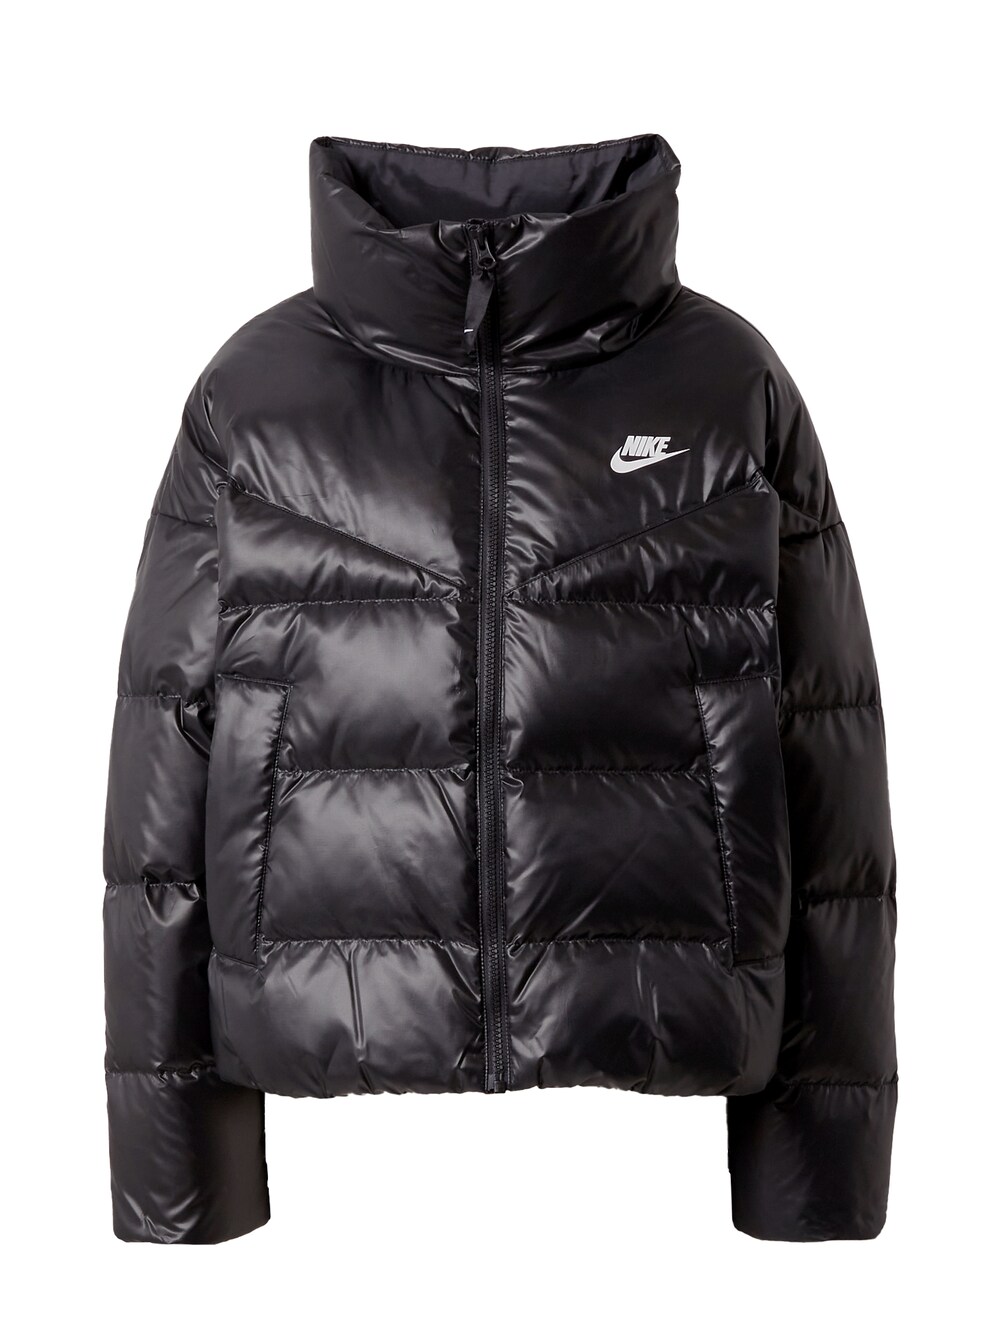 Зимняя куртка Nike, черный